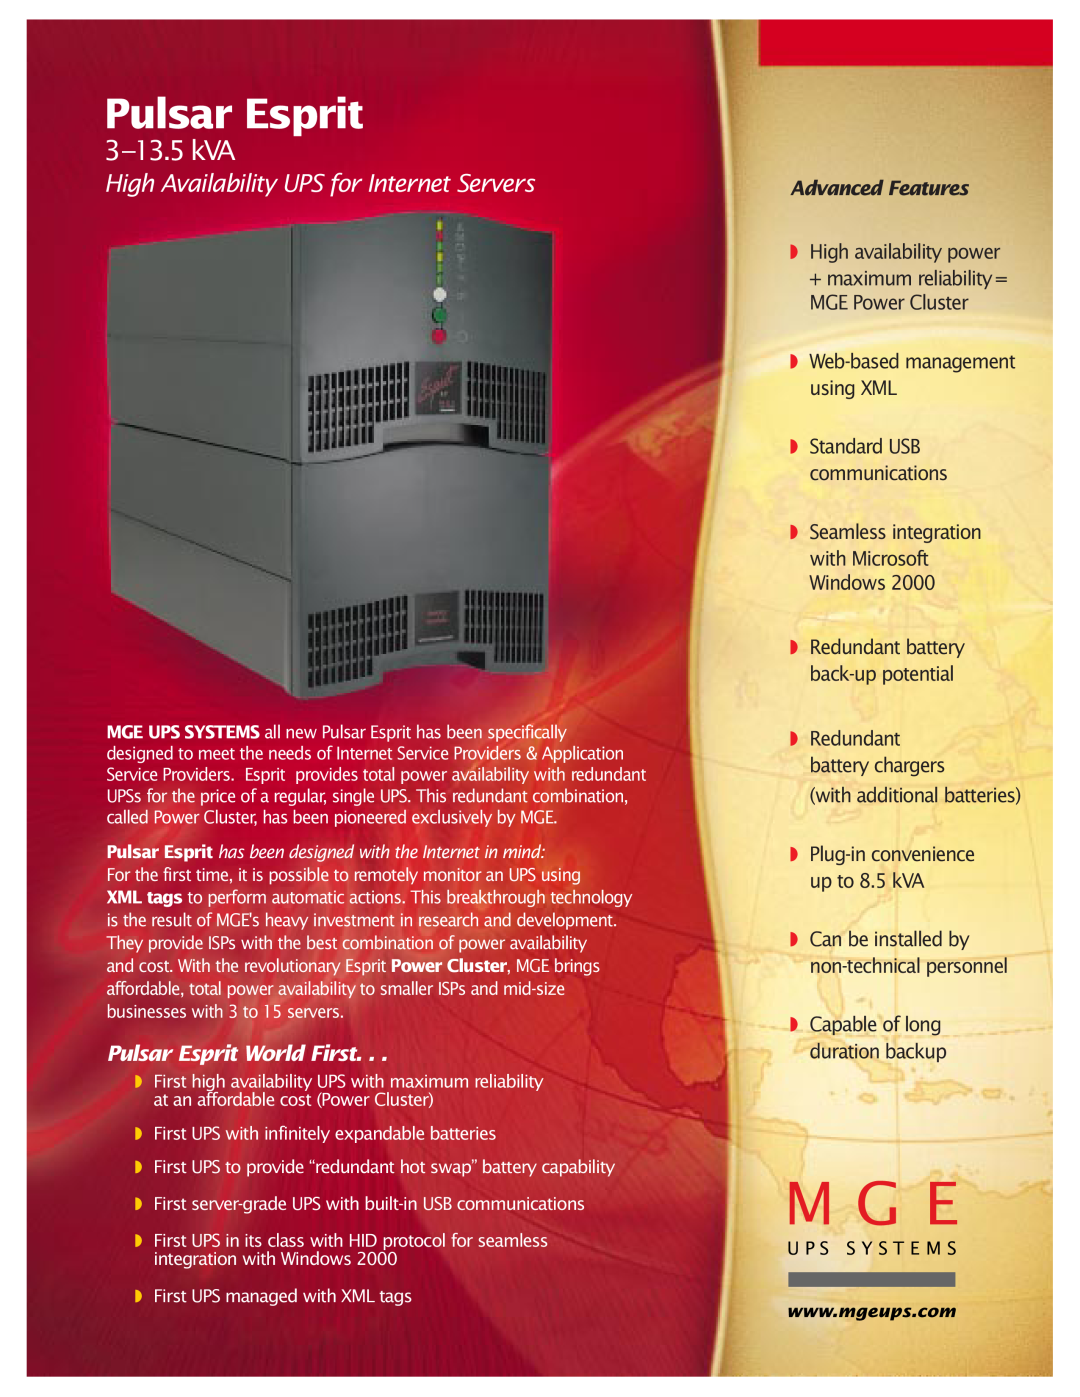 MGE UPS Systems Pulsar Esprit 313.5 kVA manual 3-13.5 kVA, High Availability UPS for Internet Servers, Advanced Features 